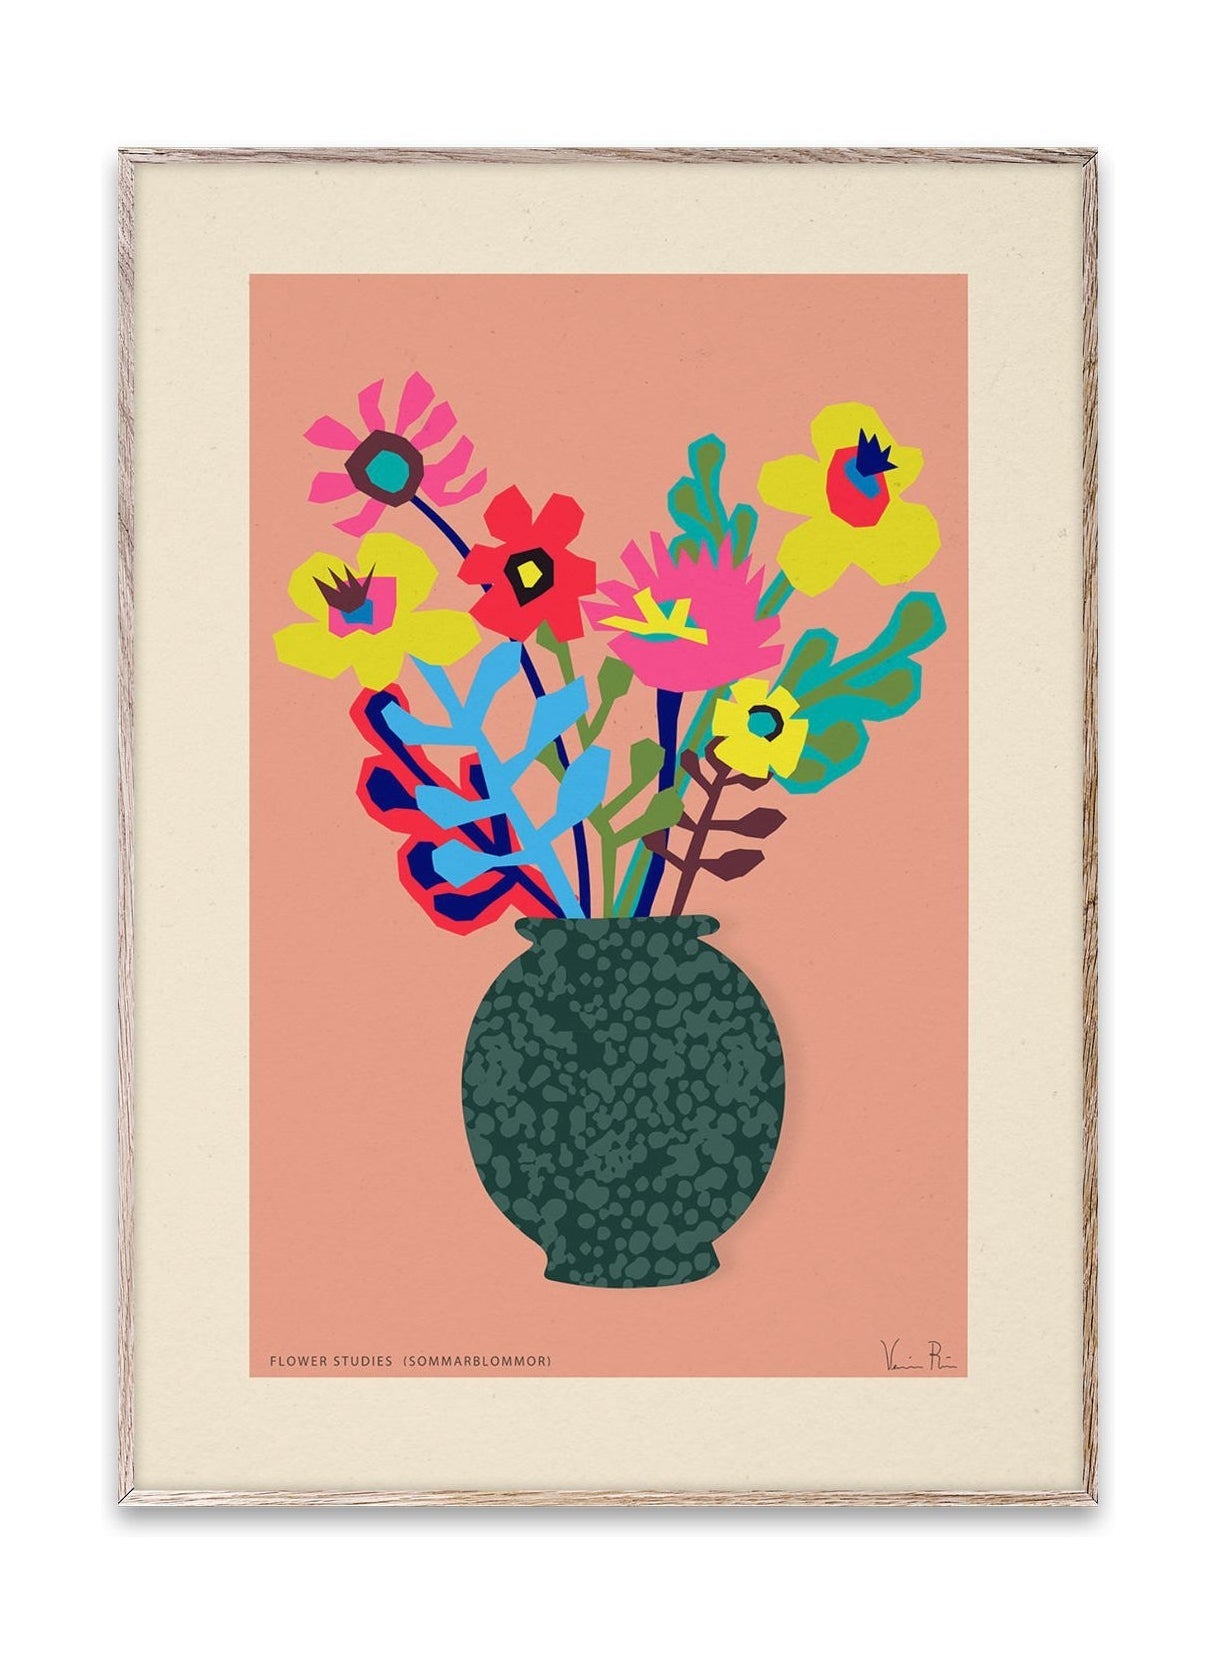 Paper Collective Flower Studies 02 (Sommarblommar) Poster, 30x40 Cm